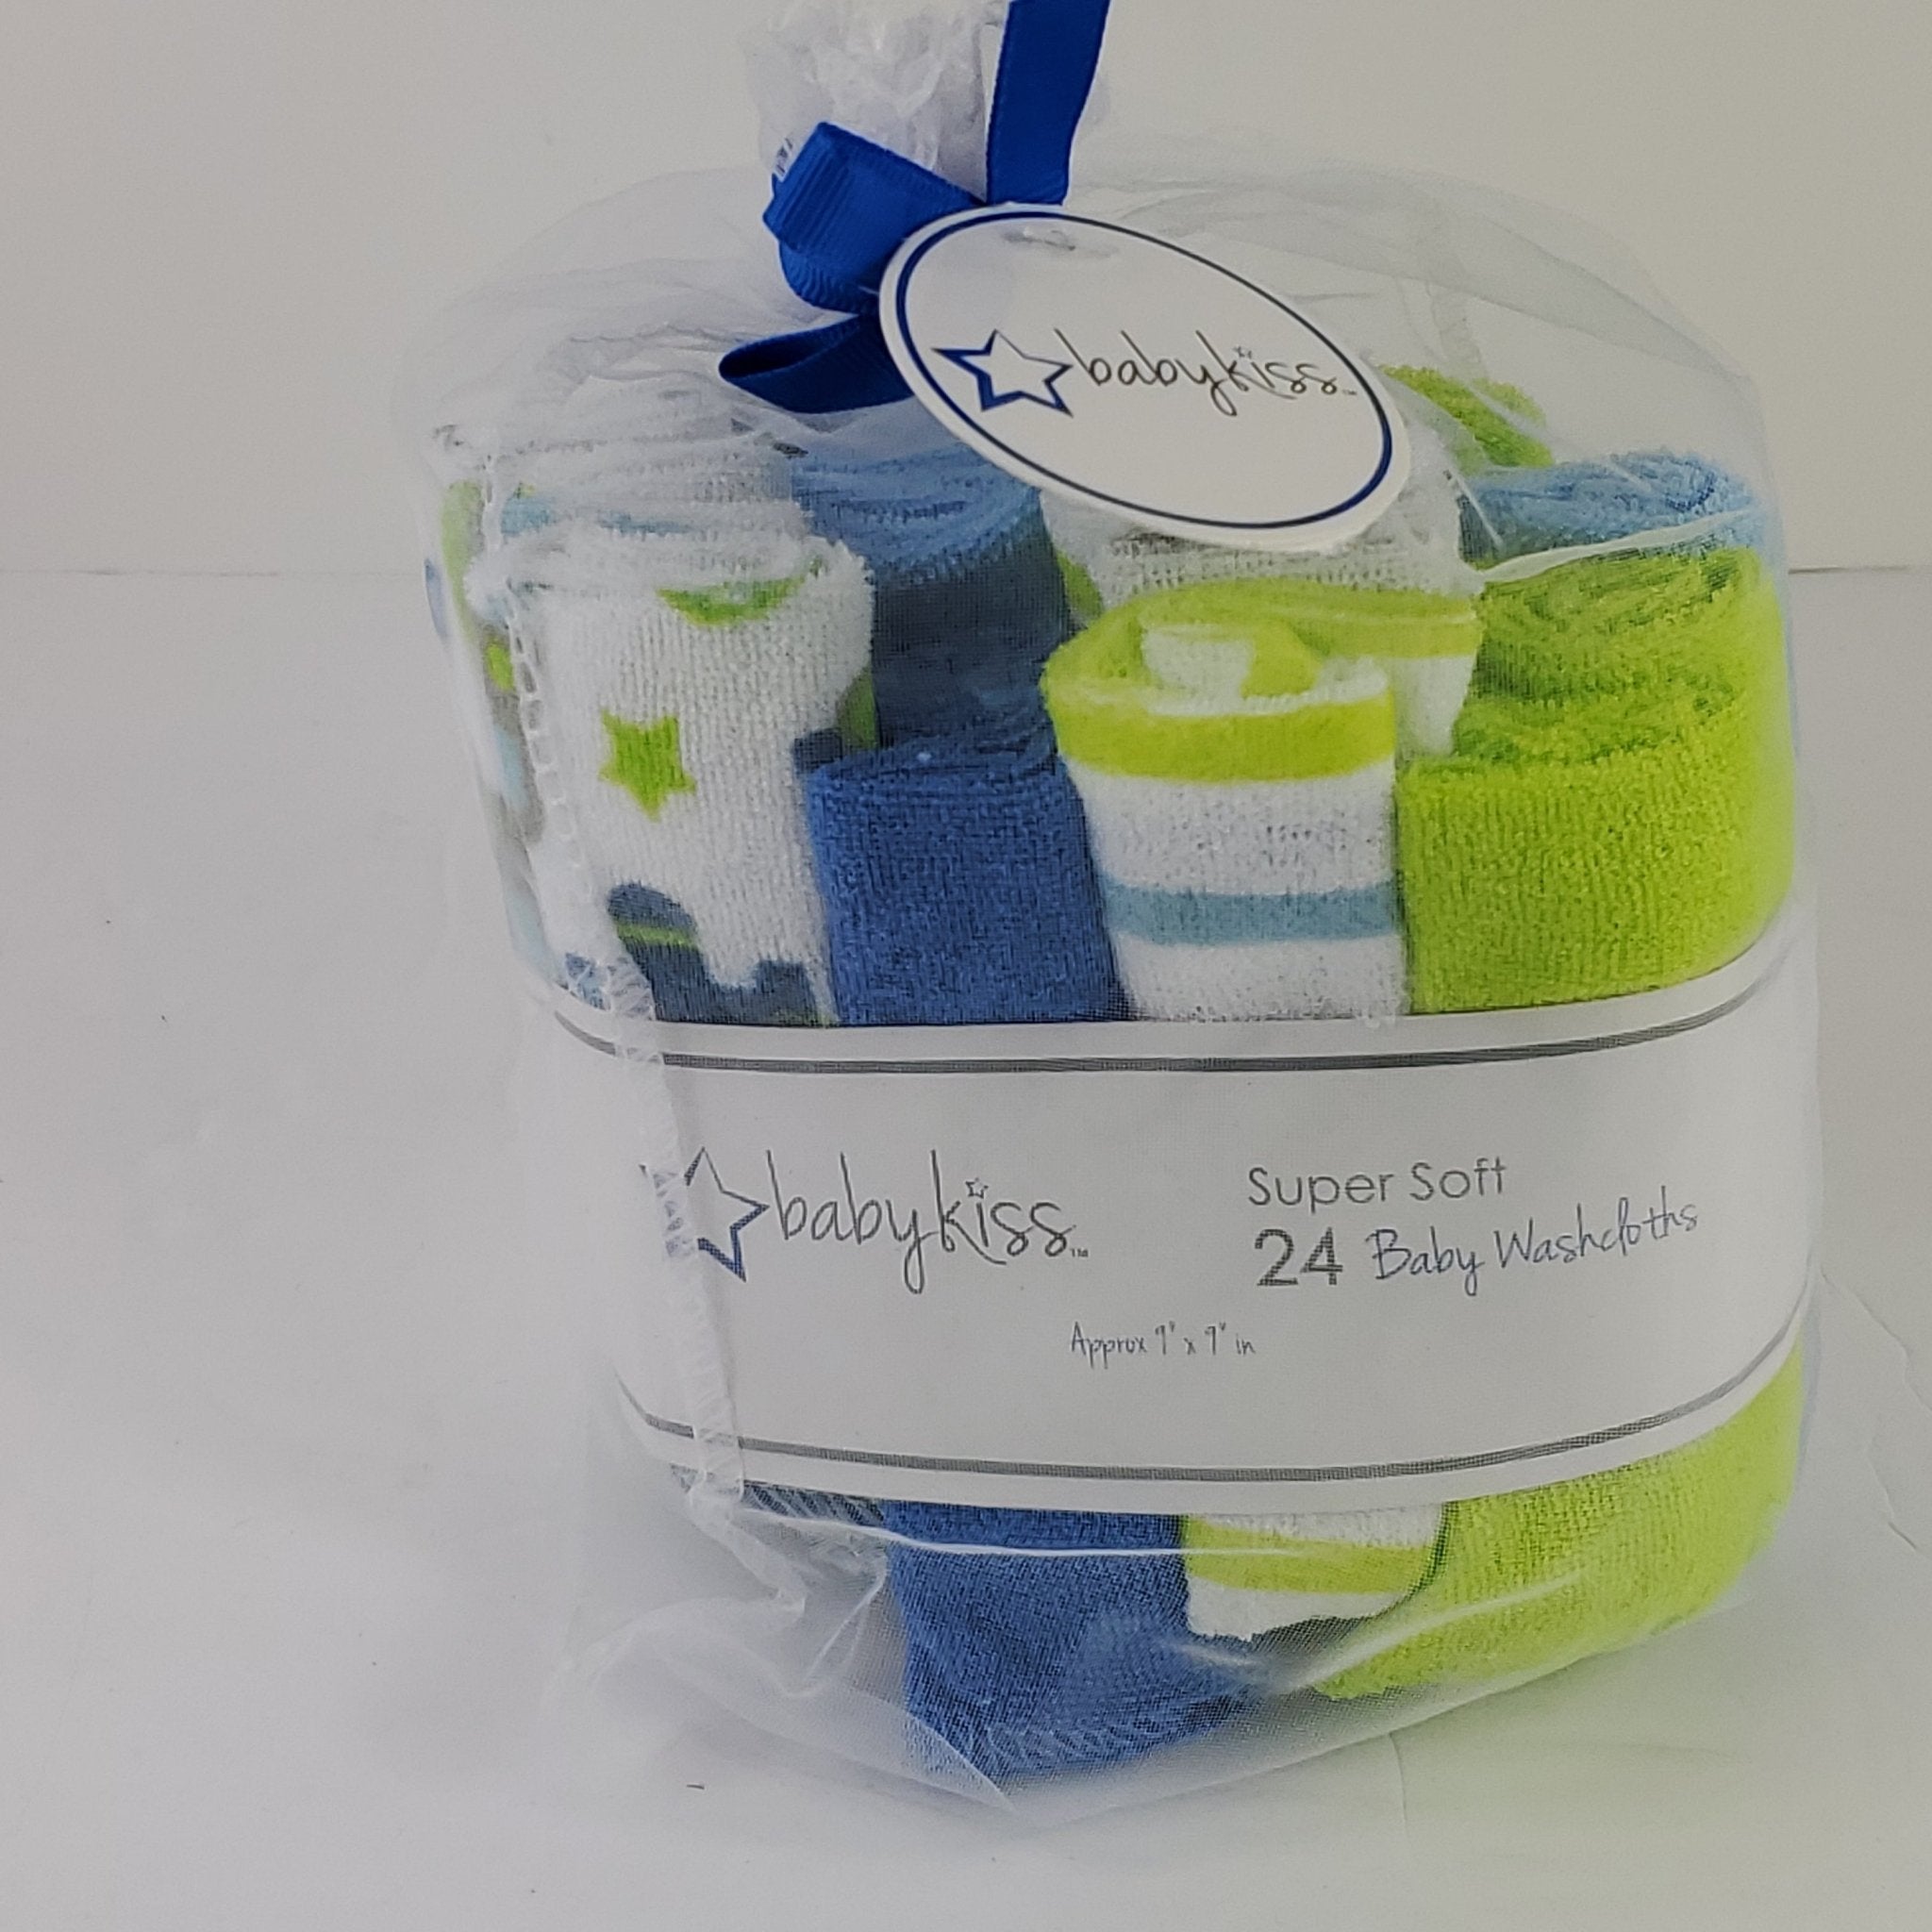 Babykiss Super Soft Baby Washcloths - Bargainwizz